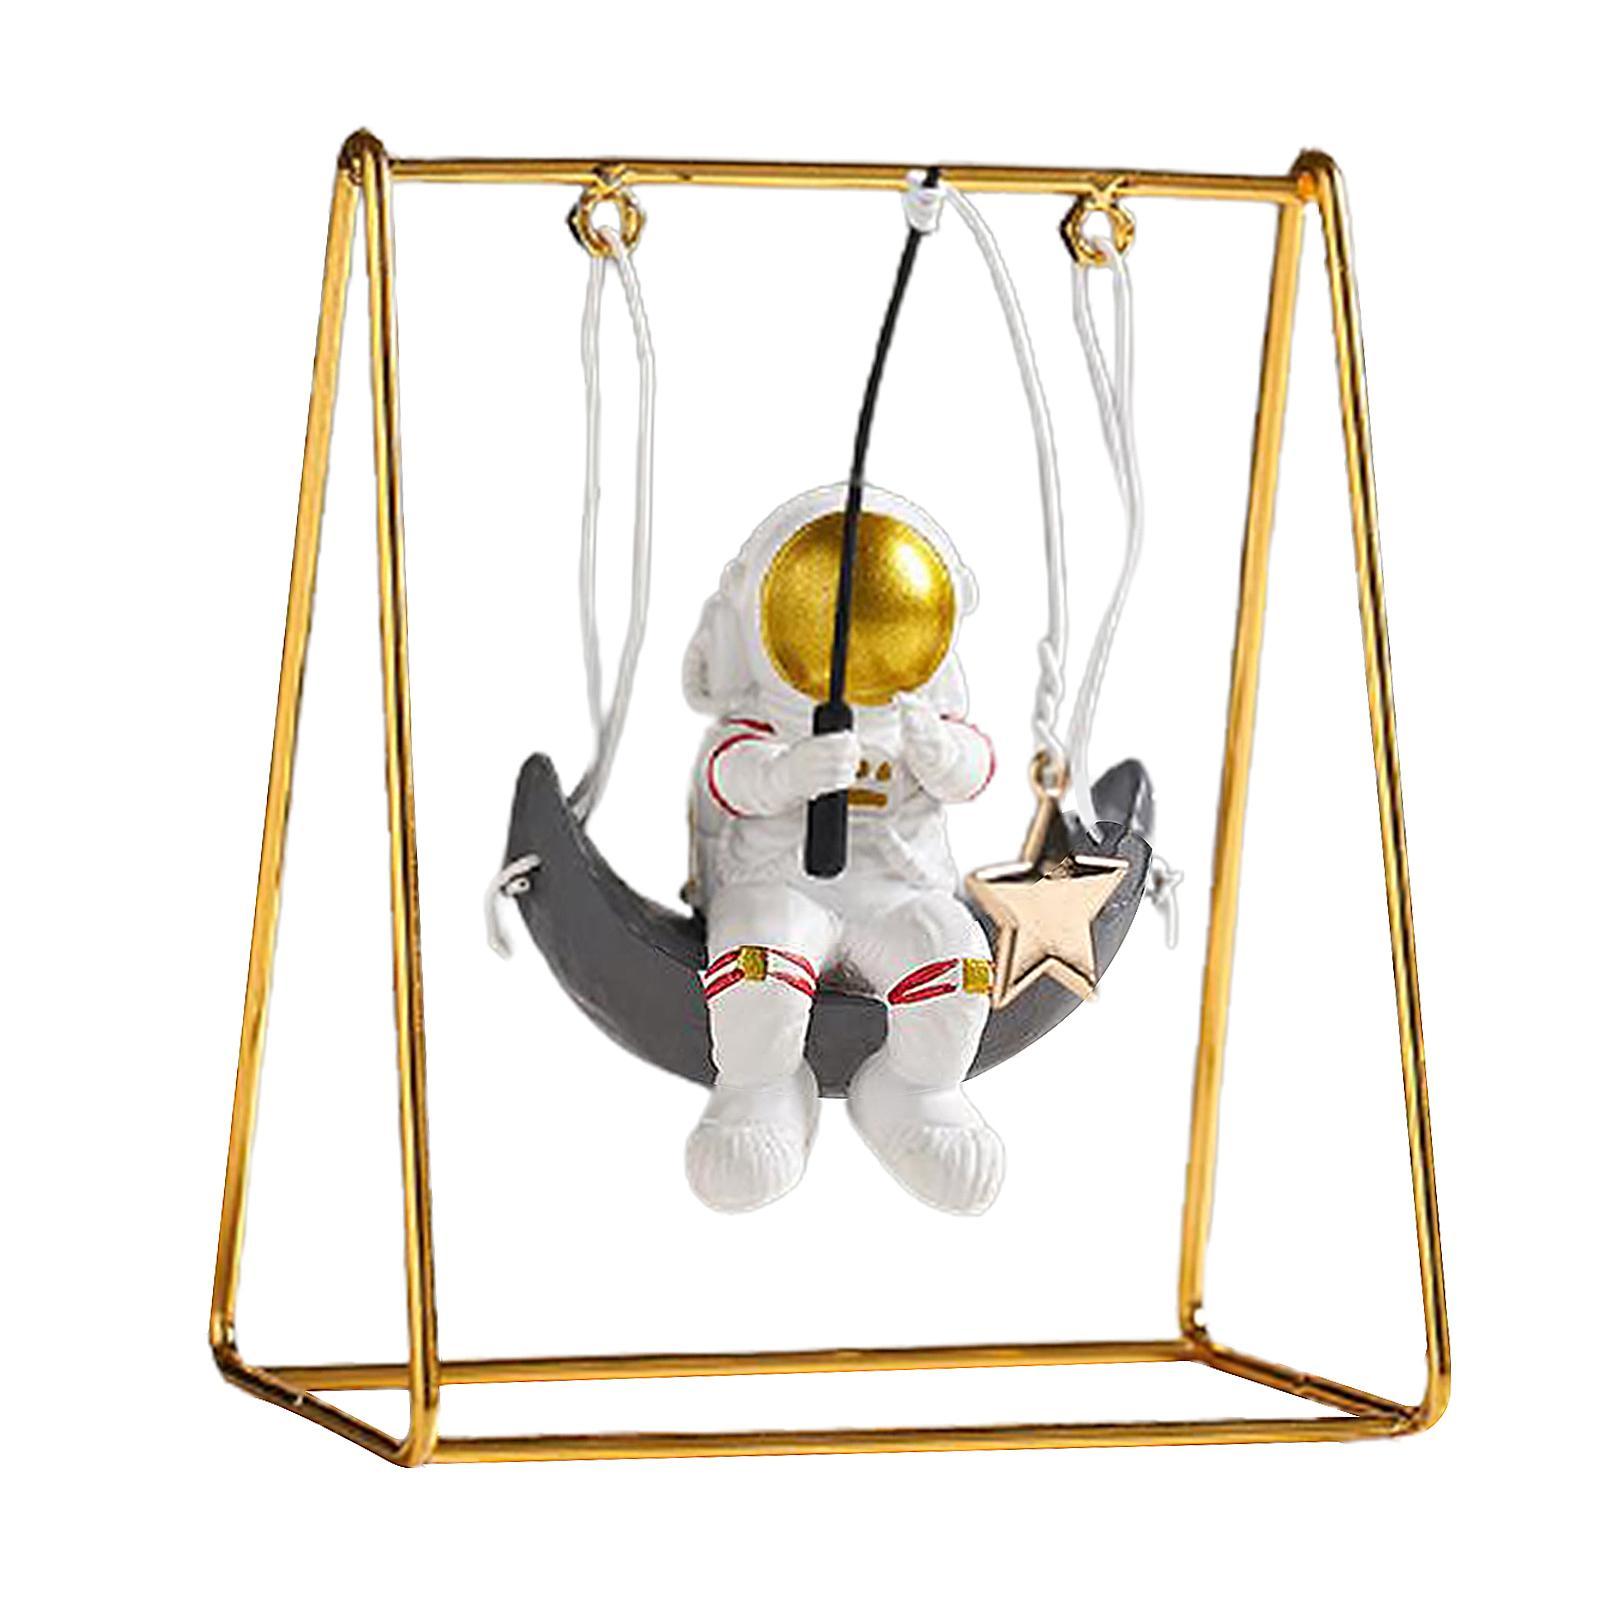 Astronaut Figurine Home Decor Shelf Statue Crafts Ornaments Child Teens Gift Star